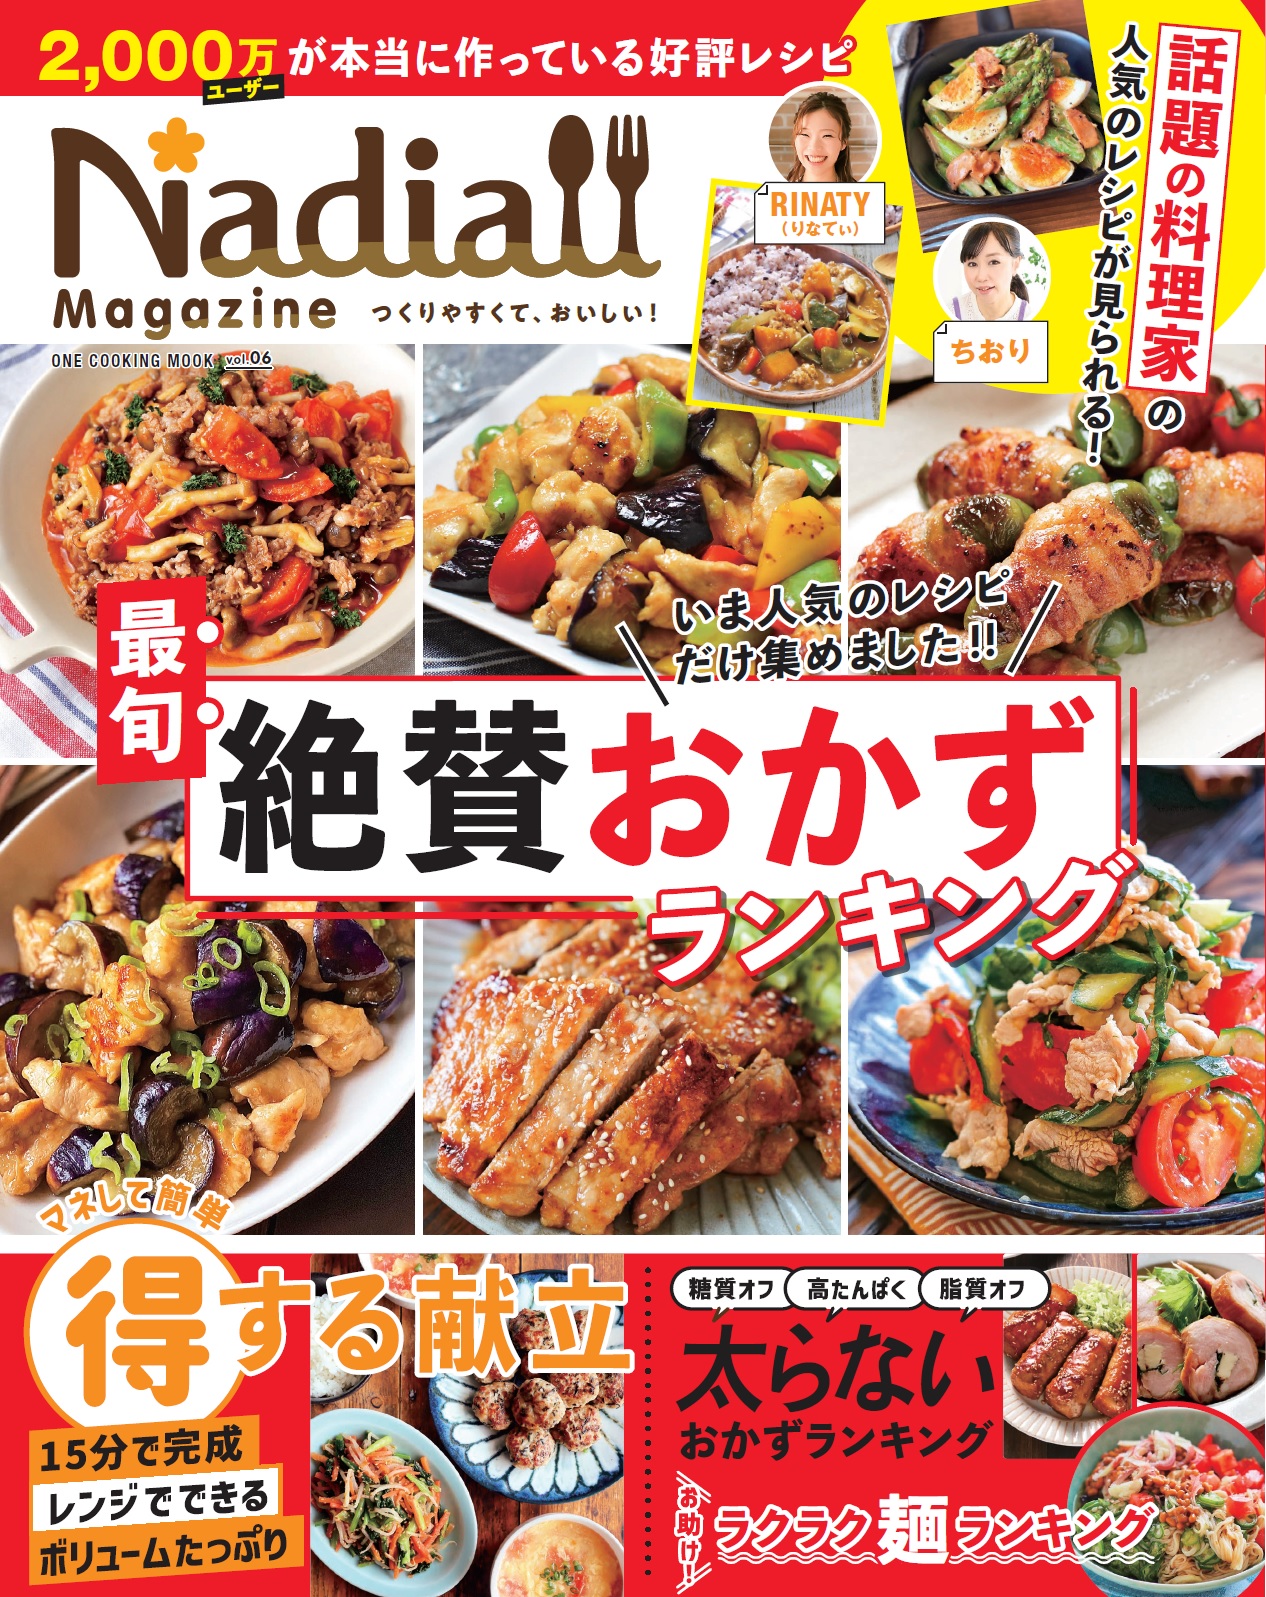 Nadia magazine vol.06